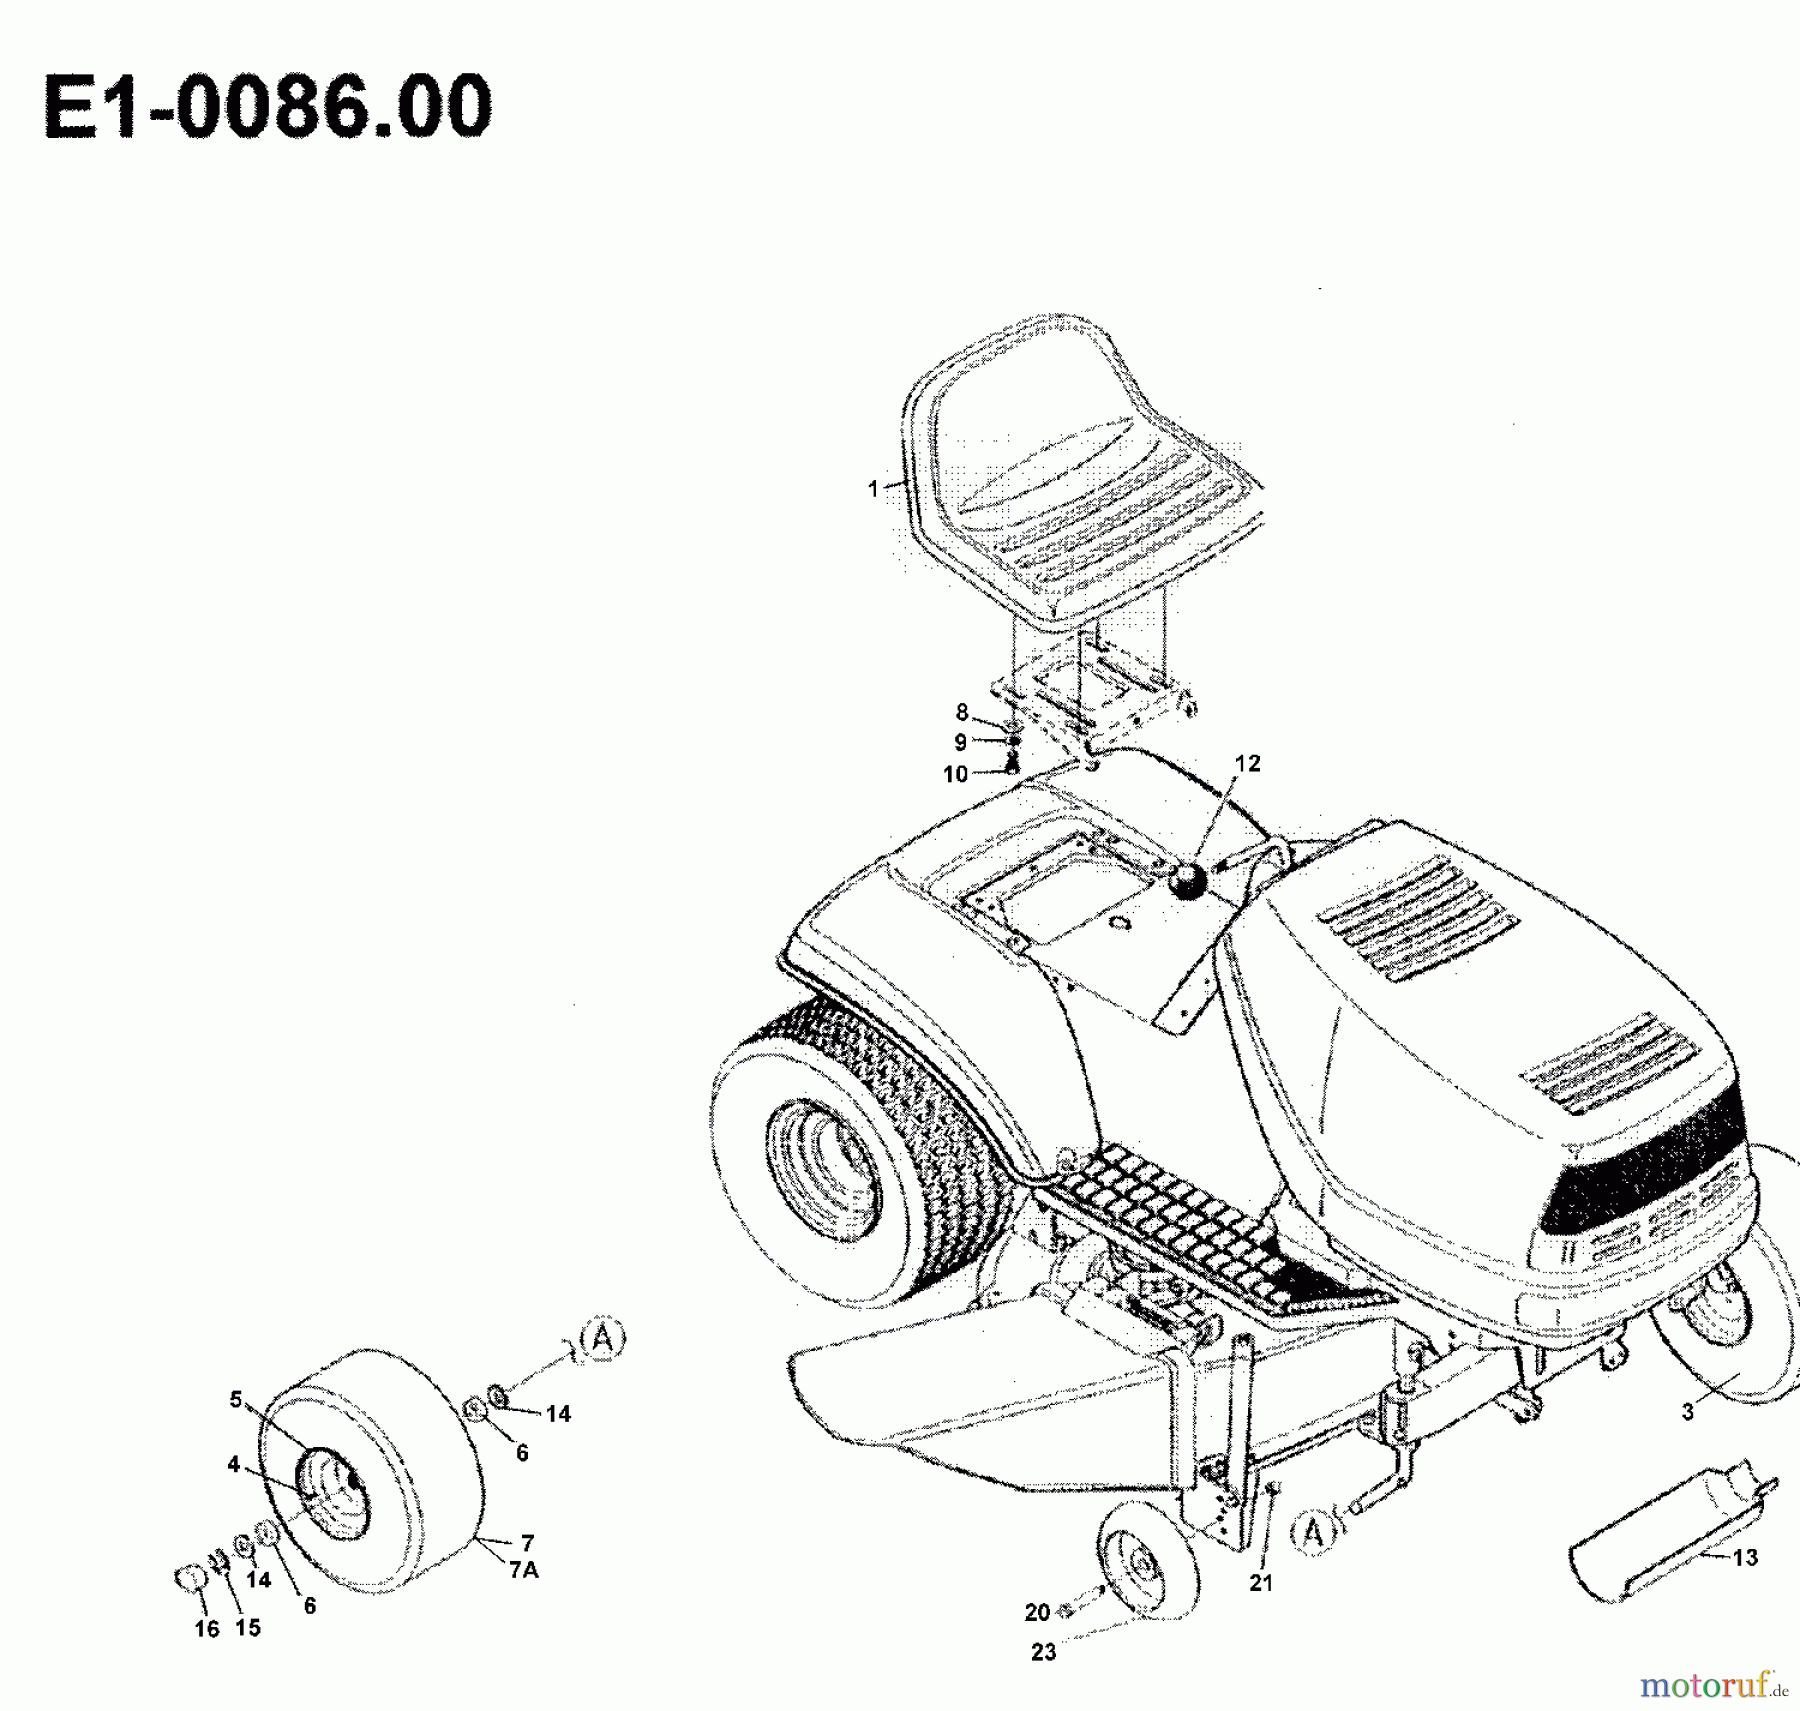  Gutbrod Tracteurs de pelouse 1114 AWS 00097.01  (1992) Siège